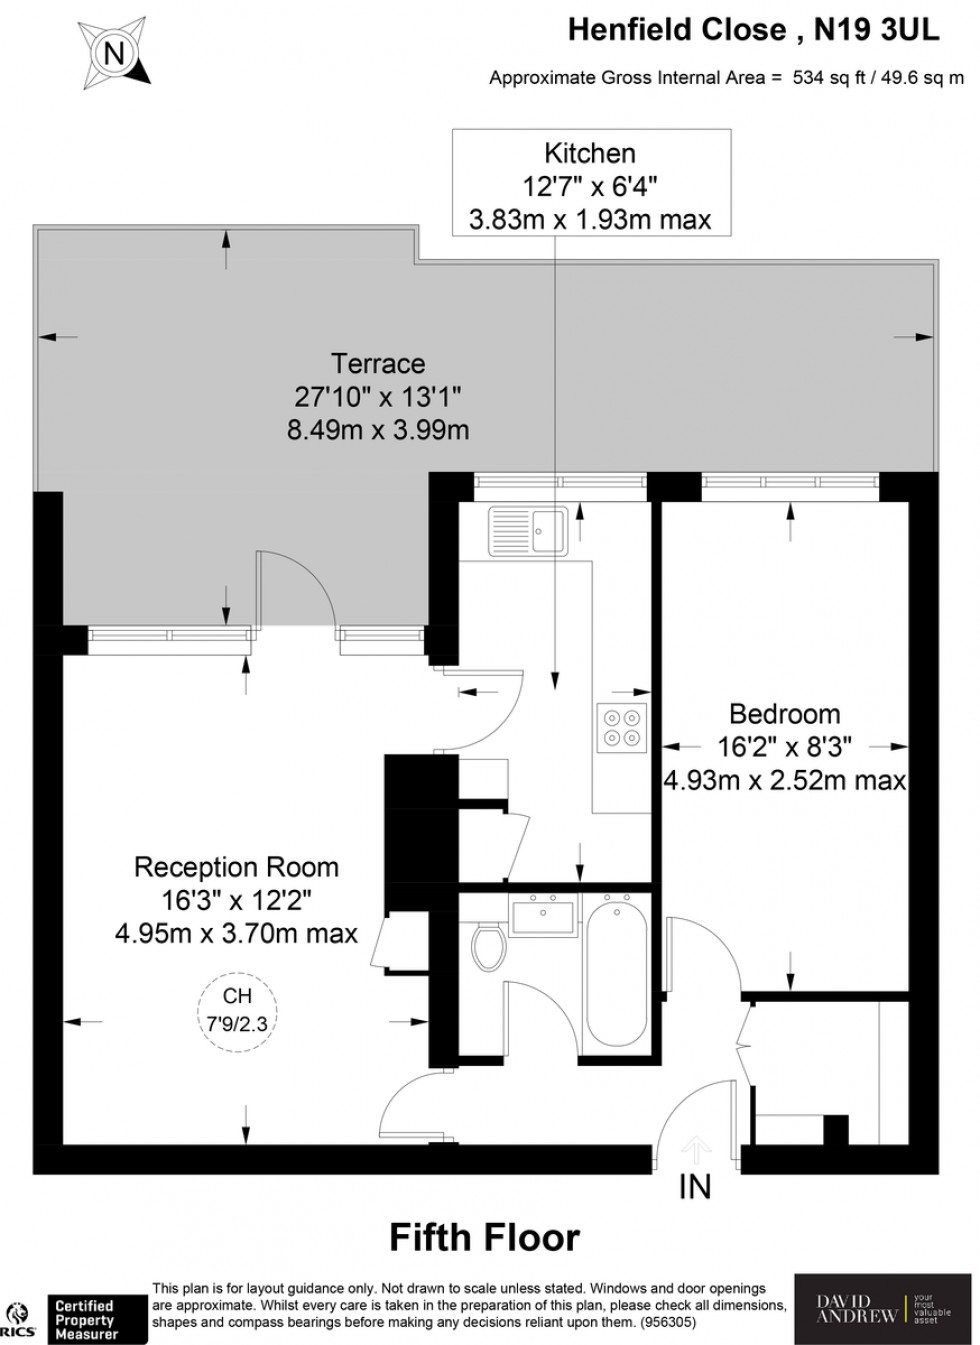 Floorplan for Henfield Close, N19 3UL